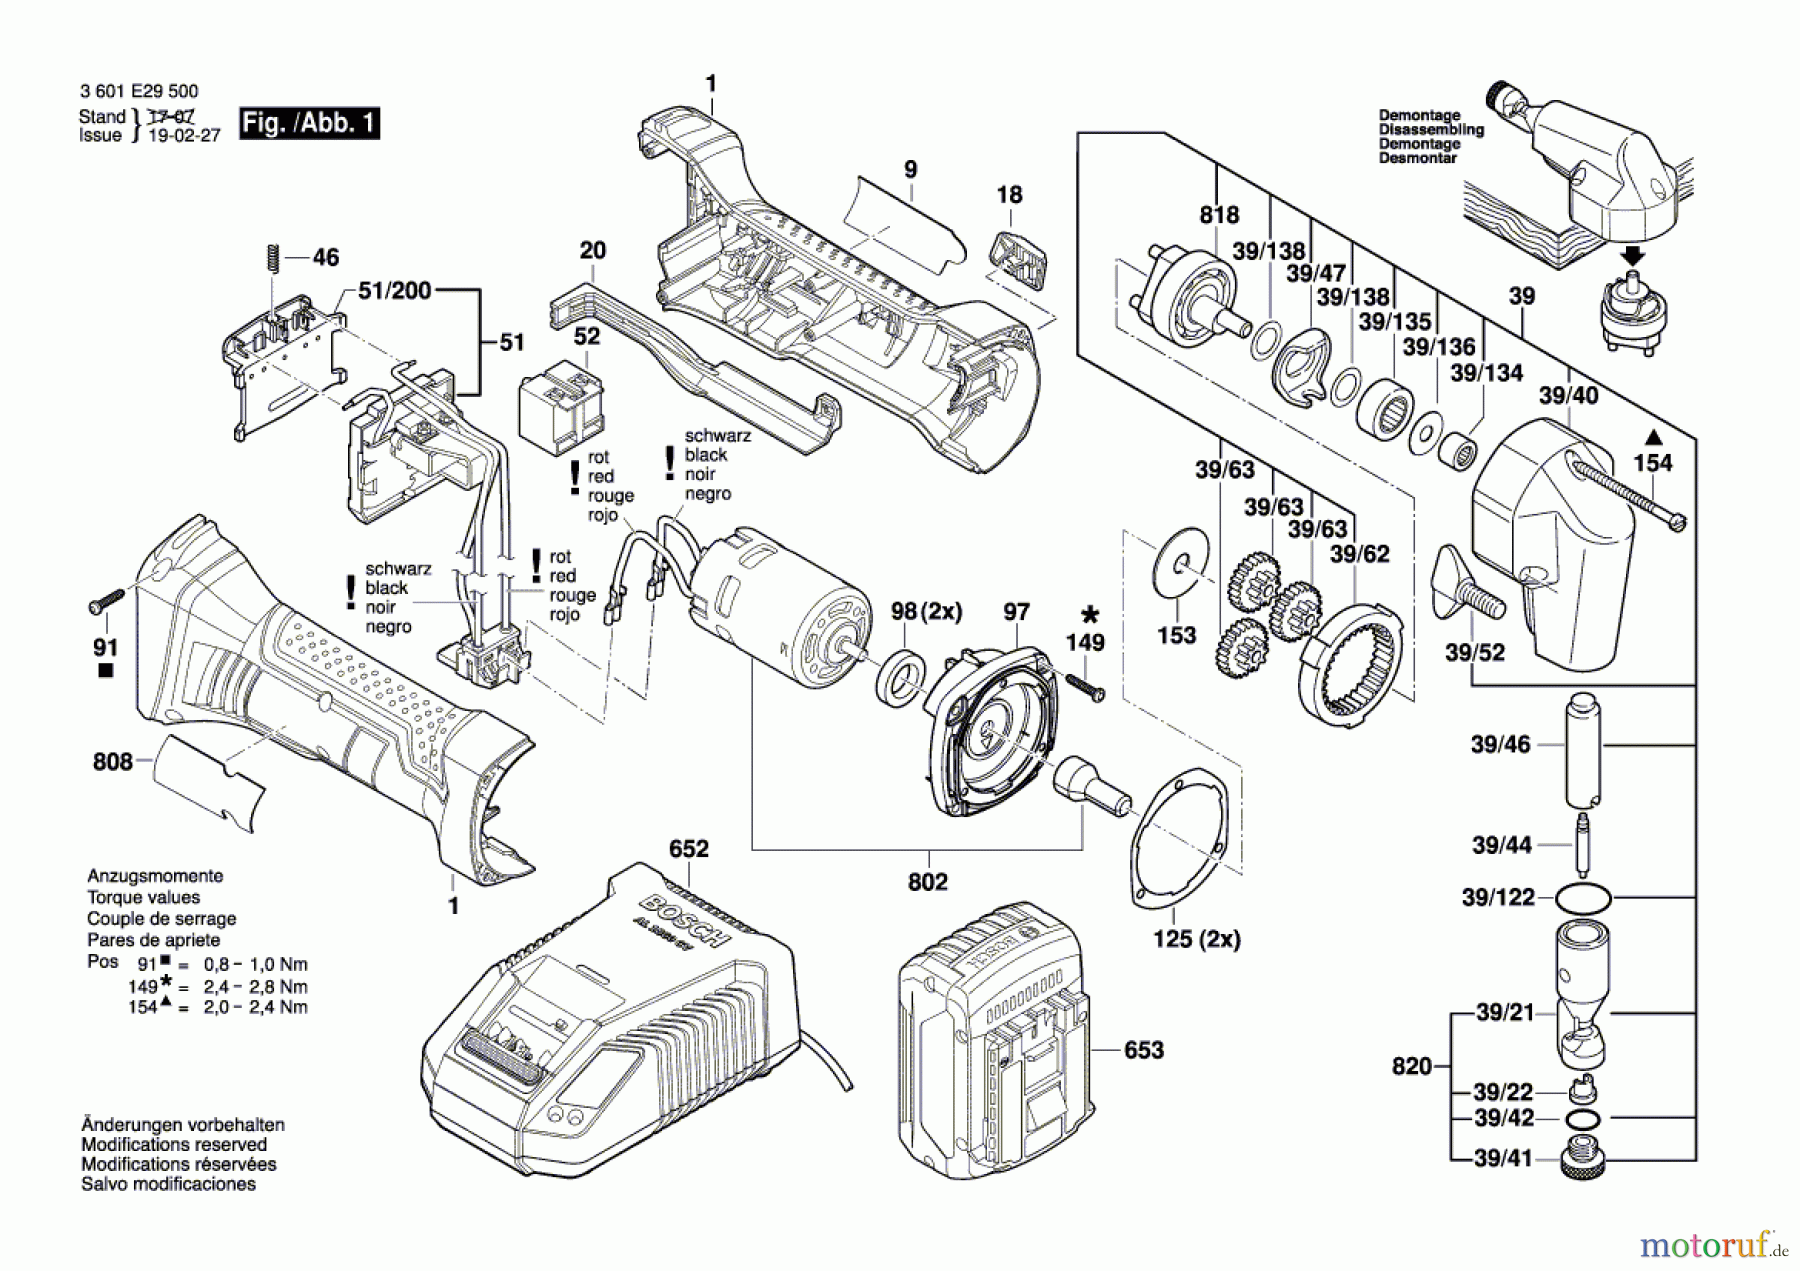  Bosch Werkzeug Nager GNA 18V-16 Seite 1